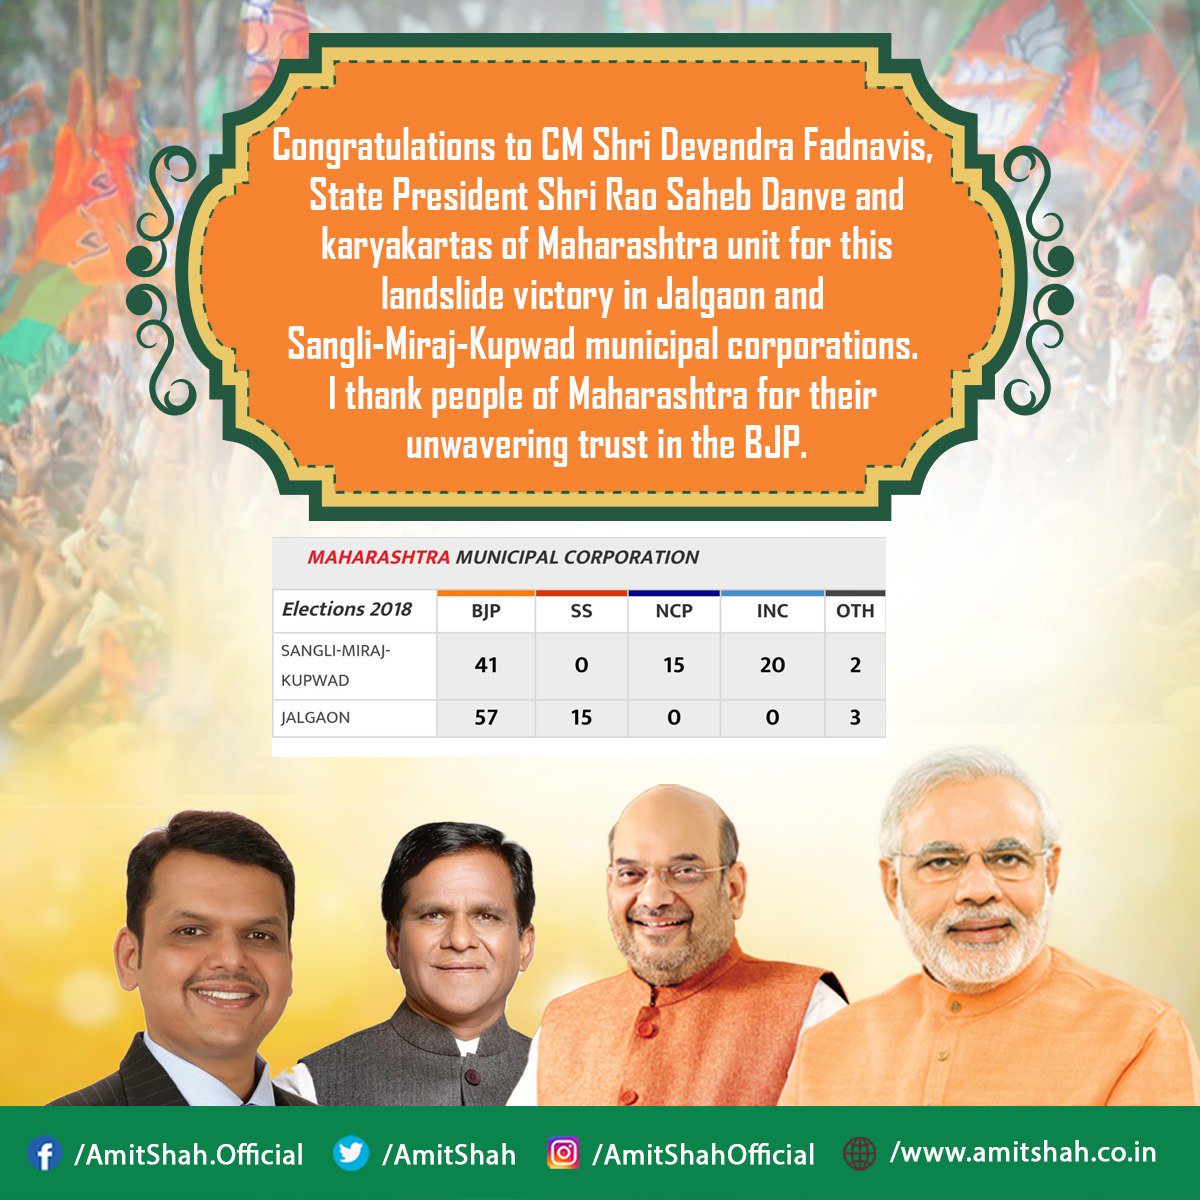 Congratulations to CM Shri @Dev_Fadnavis, State President Shri @raosahebdanve and karyakartas of @BJP4Maharashtra unit for this landslide victory in Jalgaon and Sangli-Miraj-Kupwad municipal corporations. I thank people of Maharashtra for their unwavering trust in the BJP.